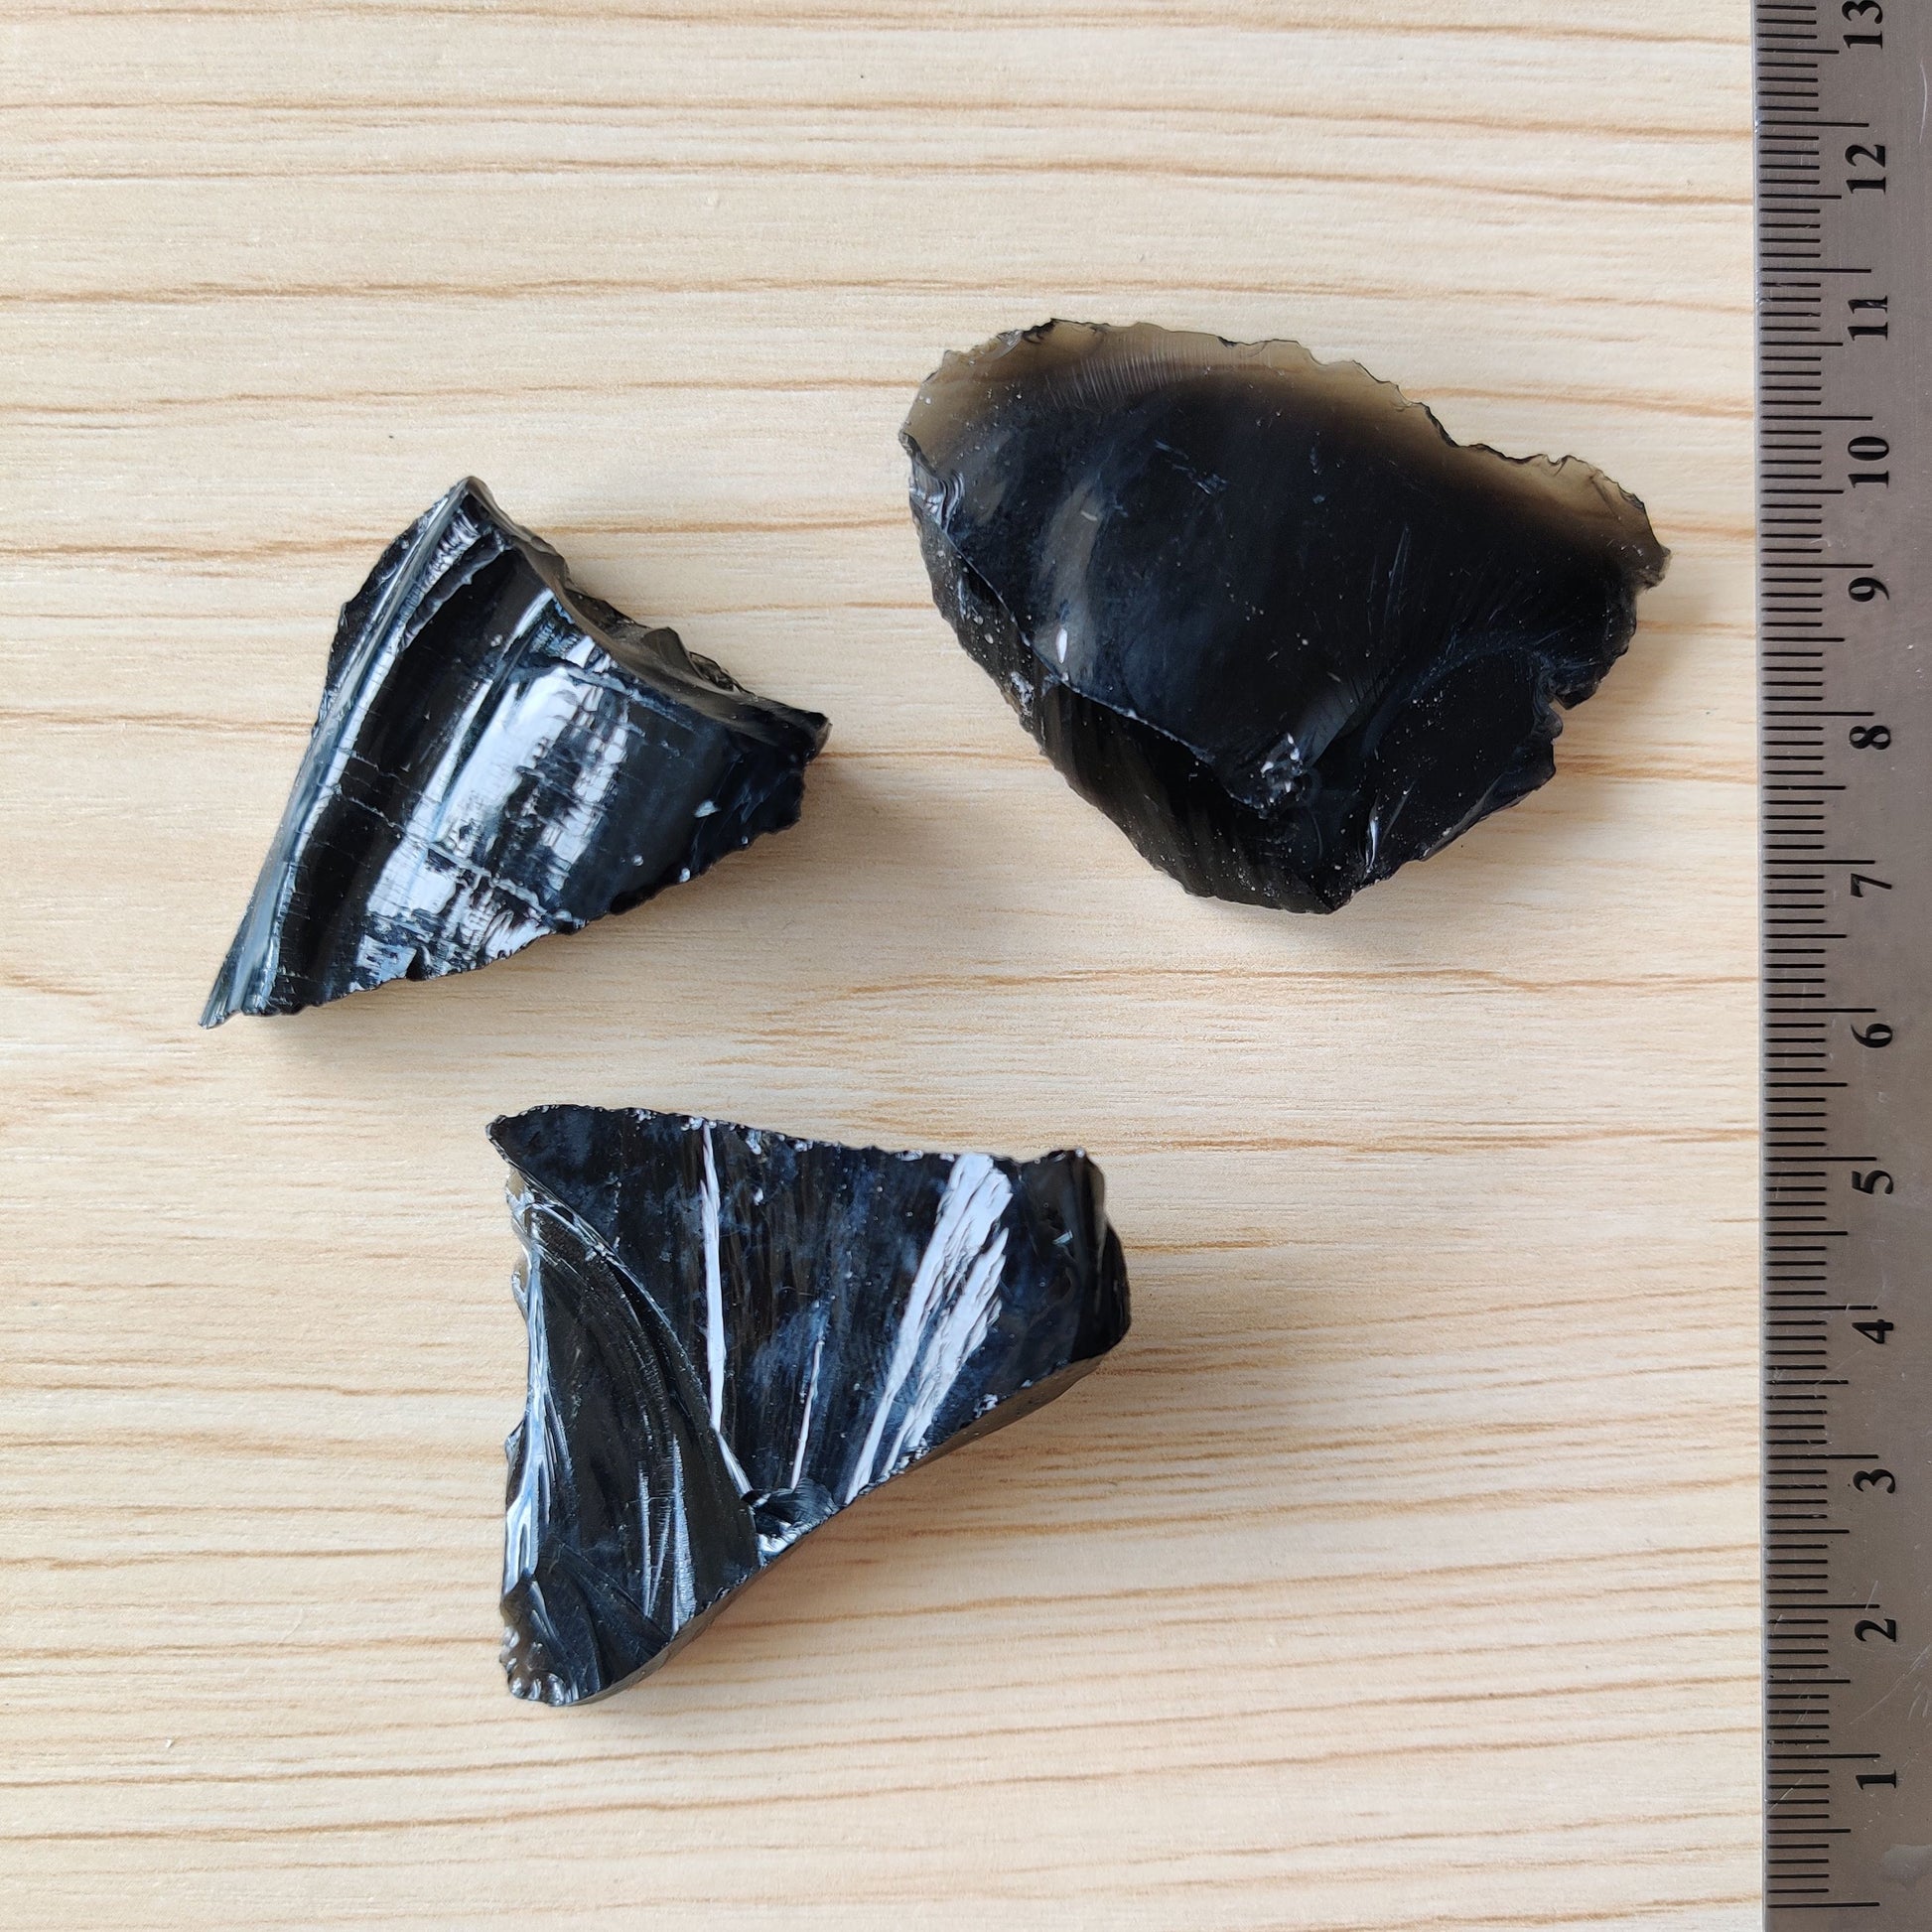 Black Obsidian Crystal Piece (3-4 cm) - Rivendell Shop